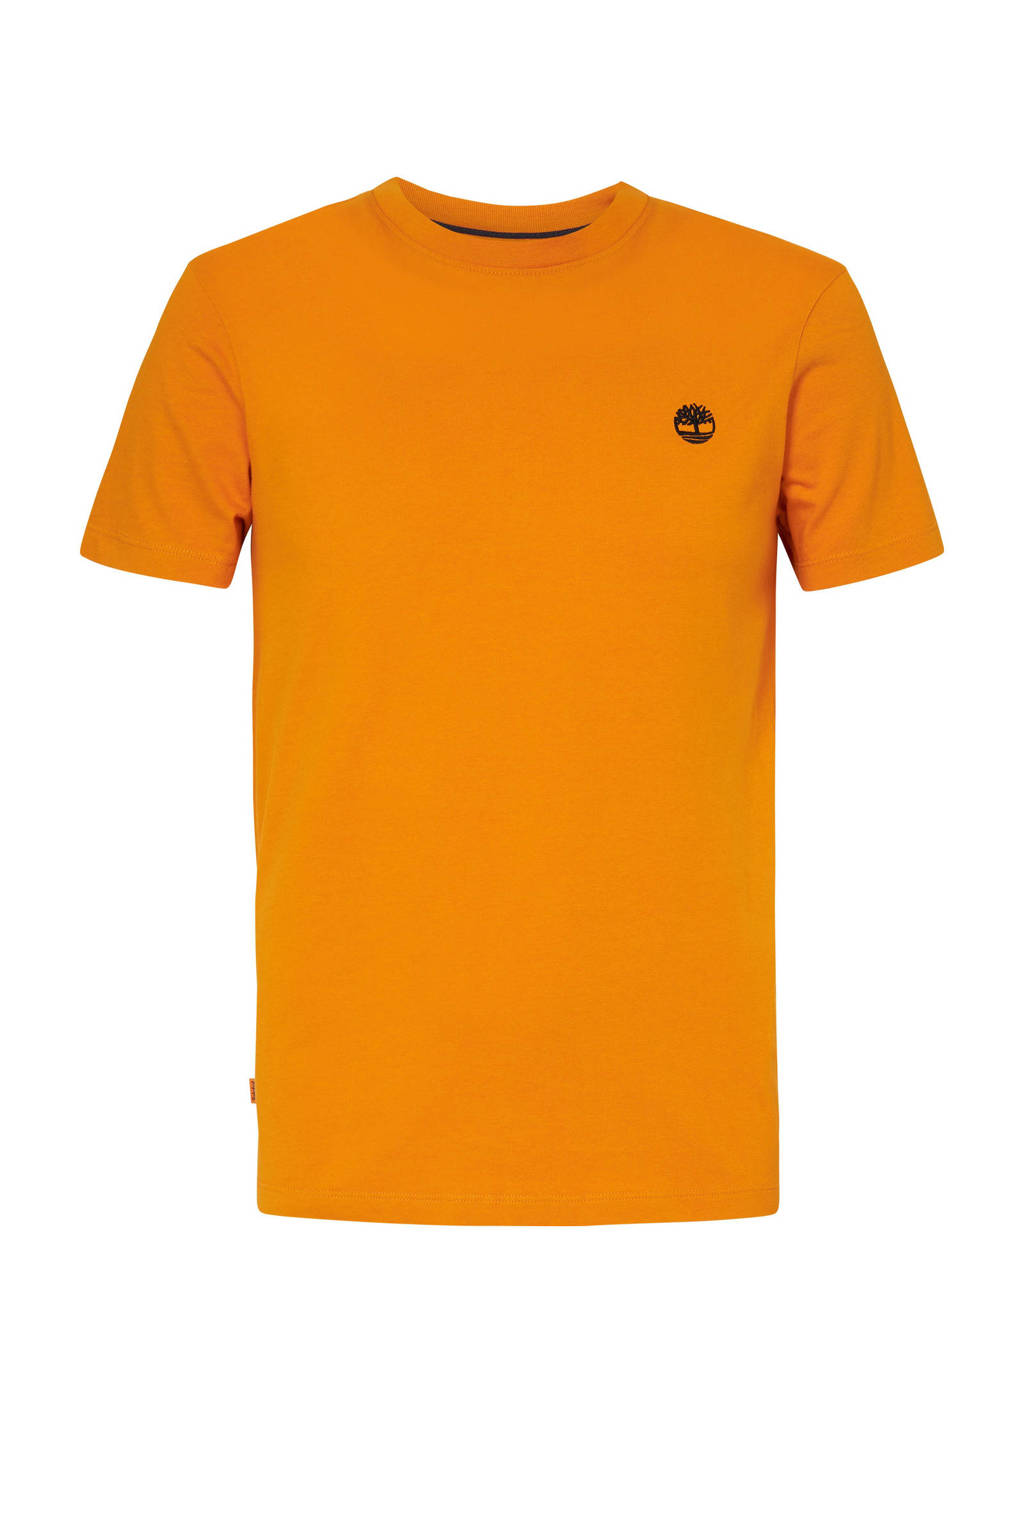 Timberland T-shirt met logo geel, Oker